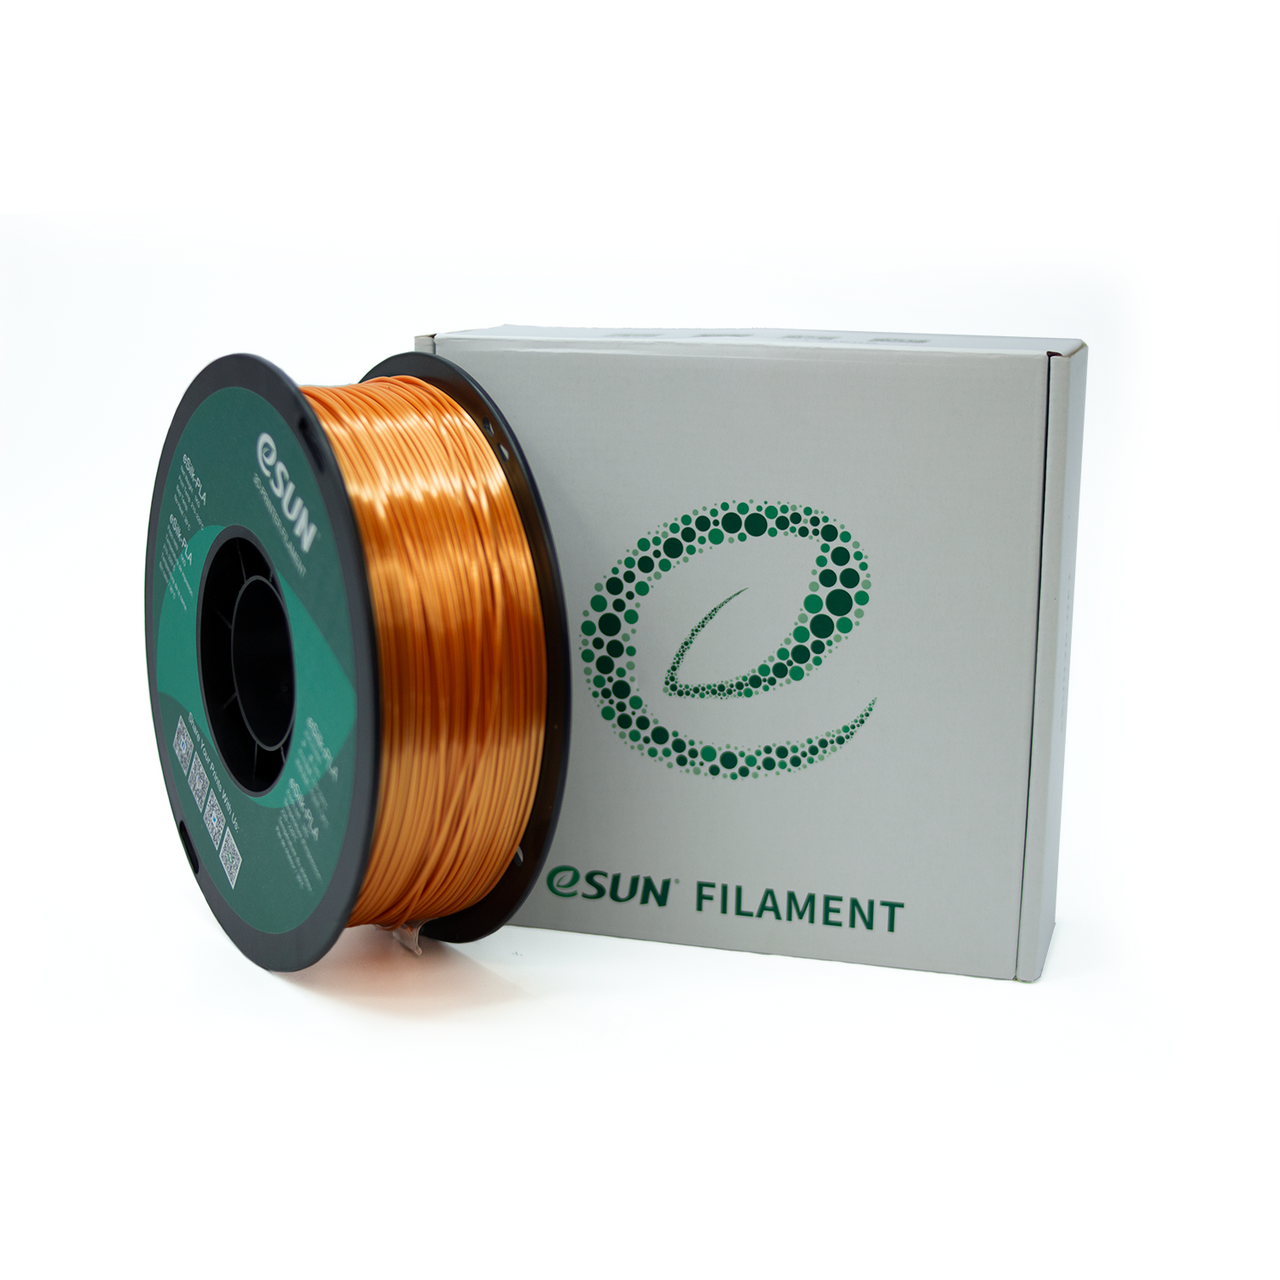 eSun Silk PLA 1.75mm 1kg Roll - Copper, filament- Lumin's Workshop